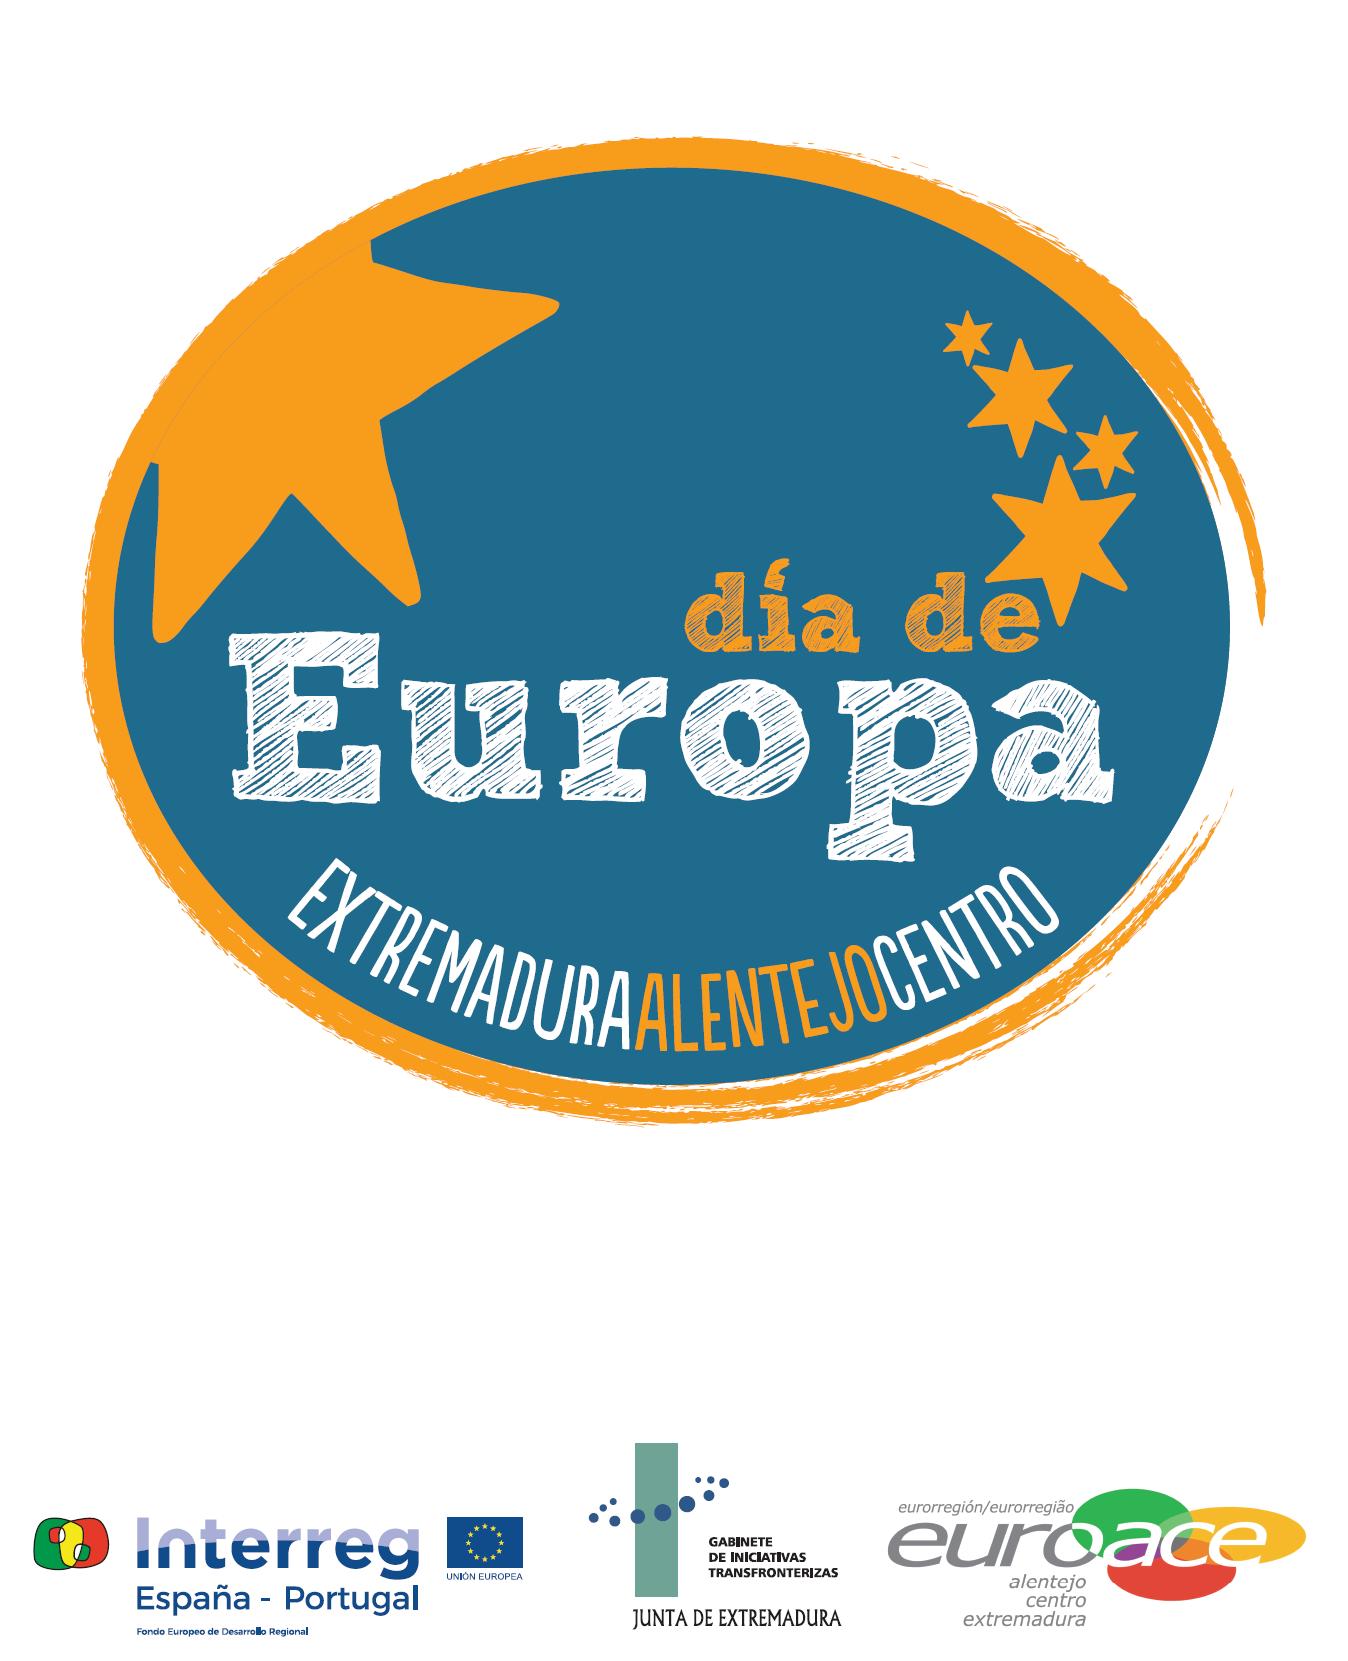 logo_dia_europa_euroace.jpg